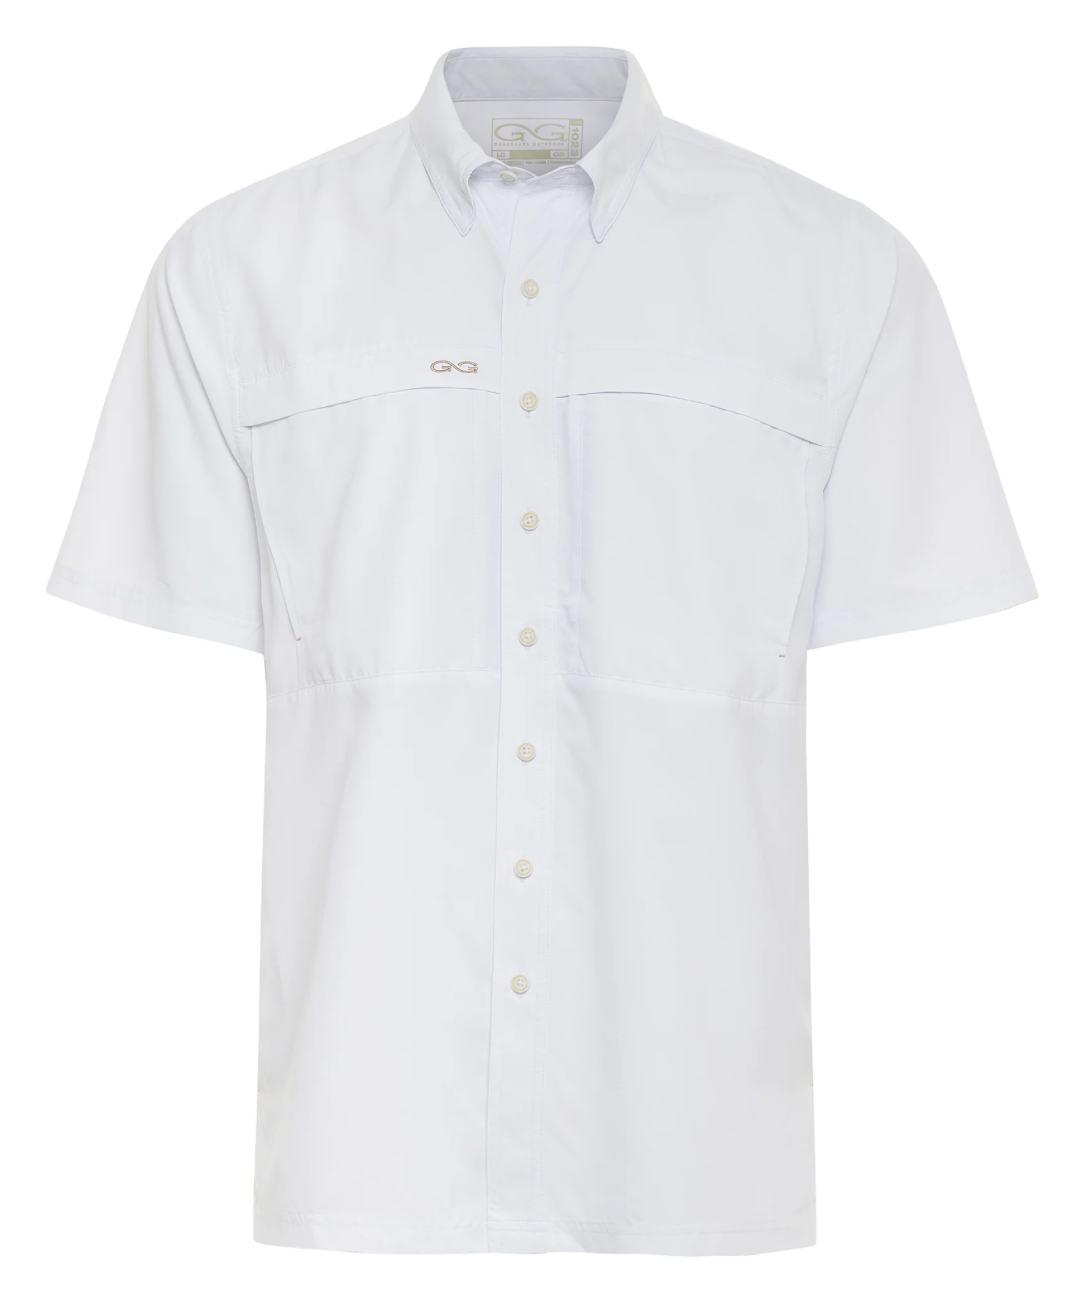 GameGuard White Microfiber Shirt